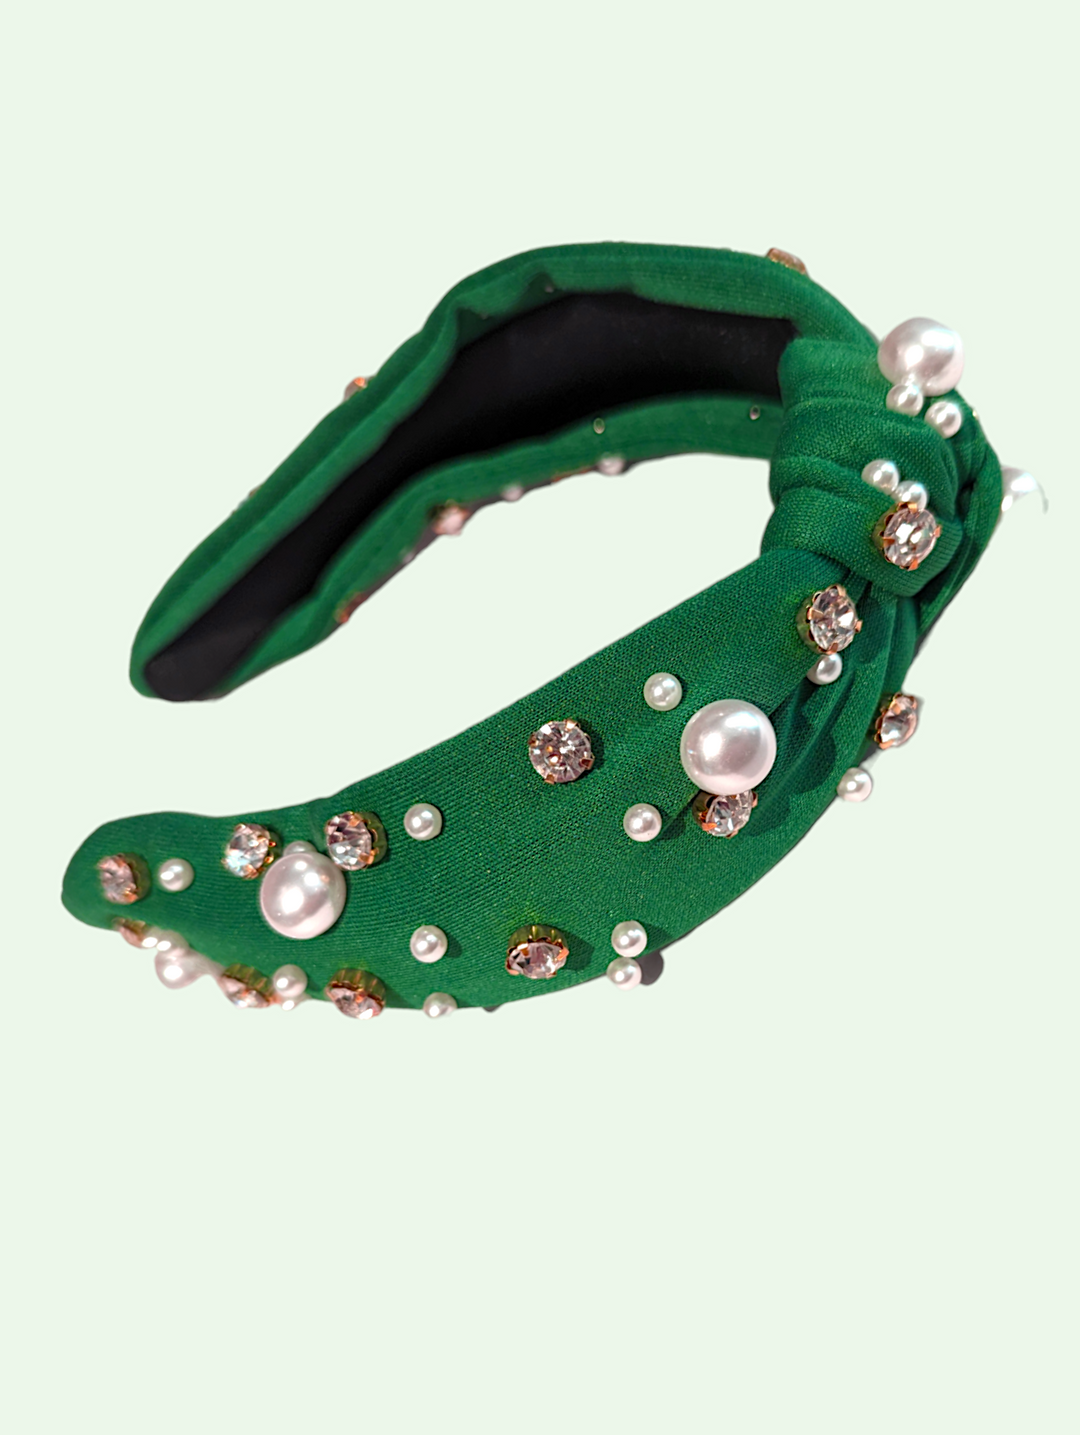 studio shot of the green  headband with pearls and rhinestones